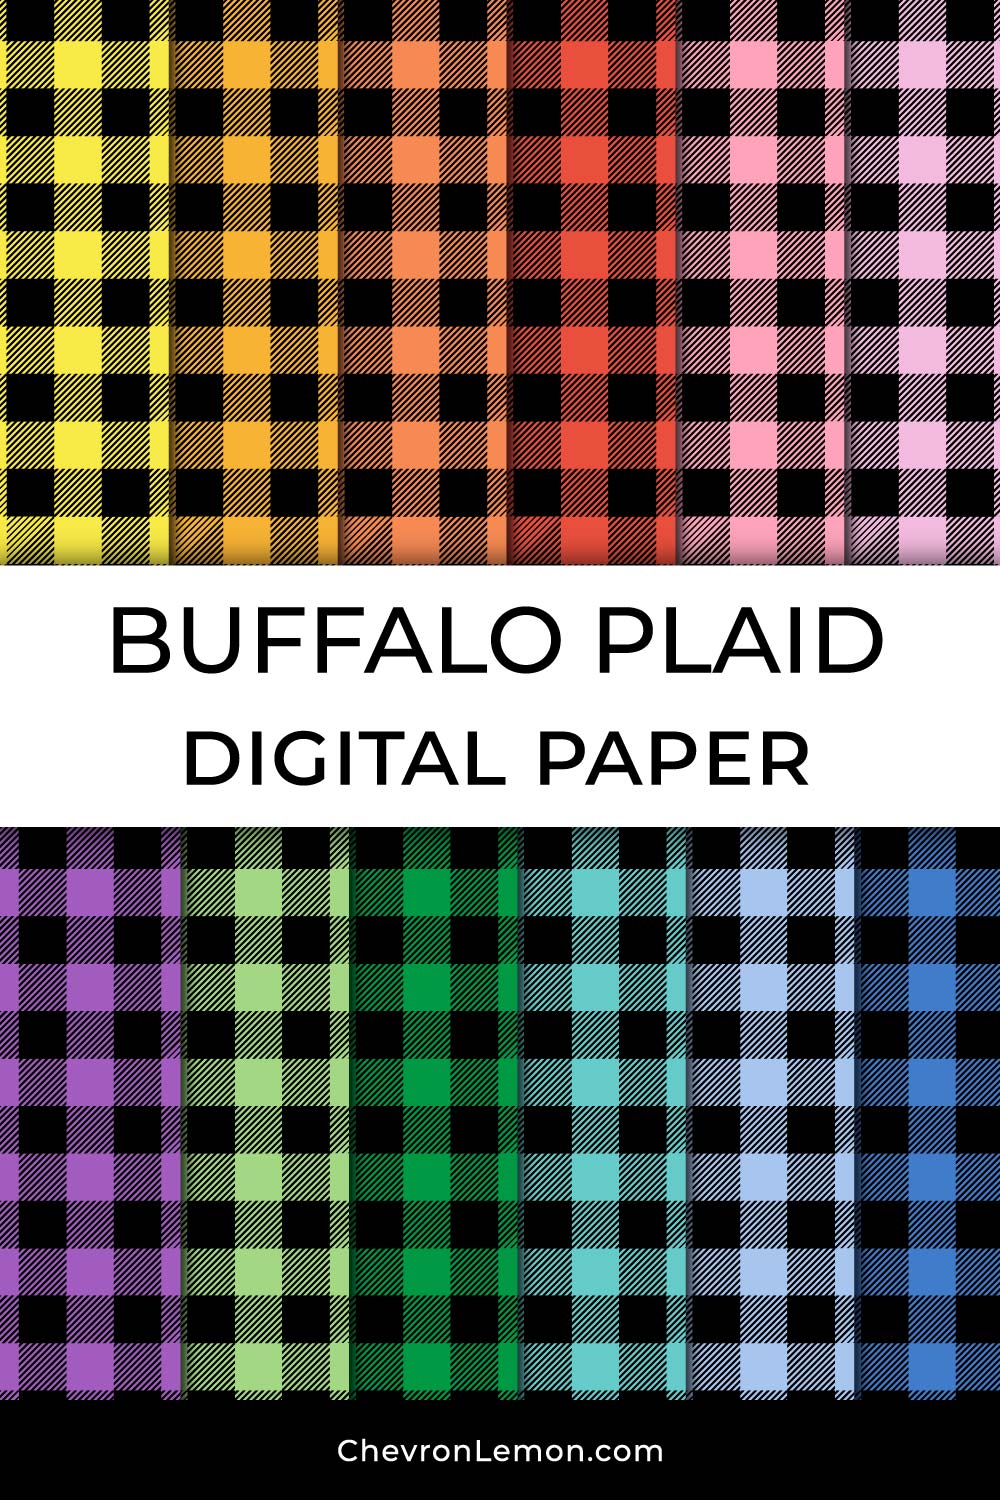 Bufallo plaid digital paper pack